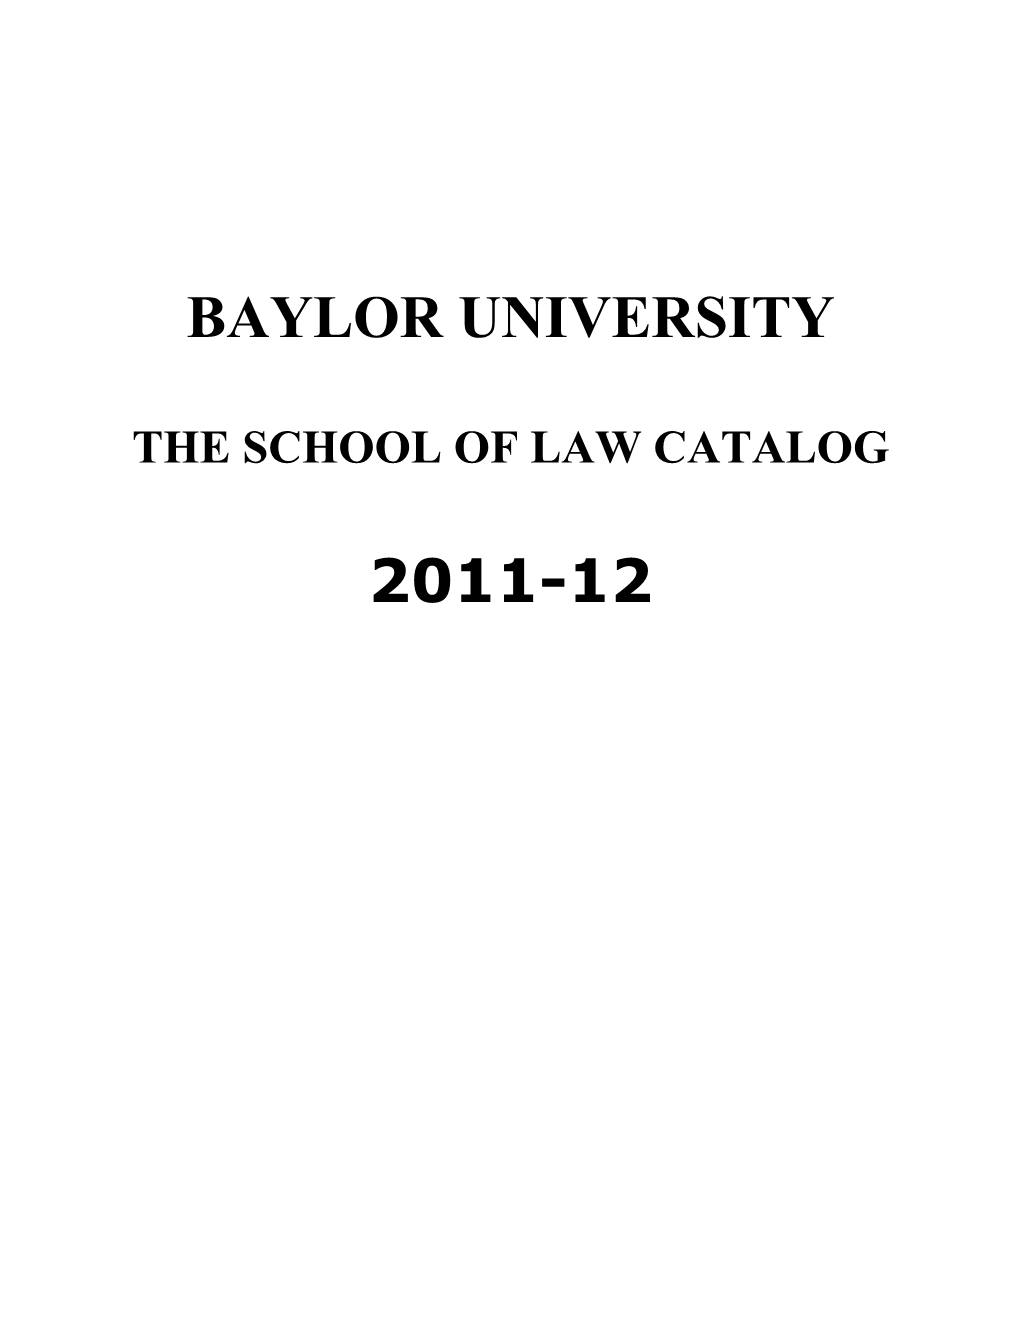 Law School Catalog